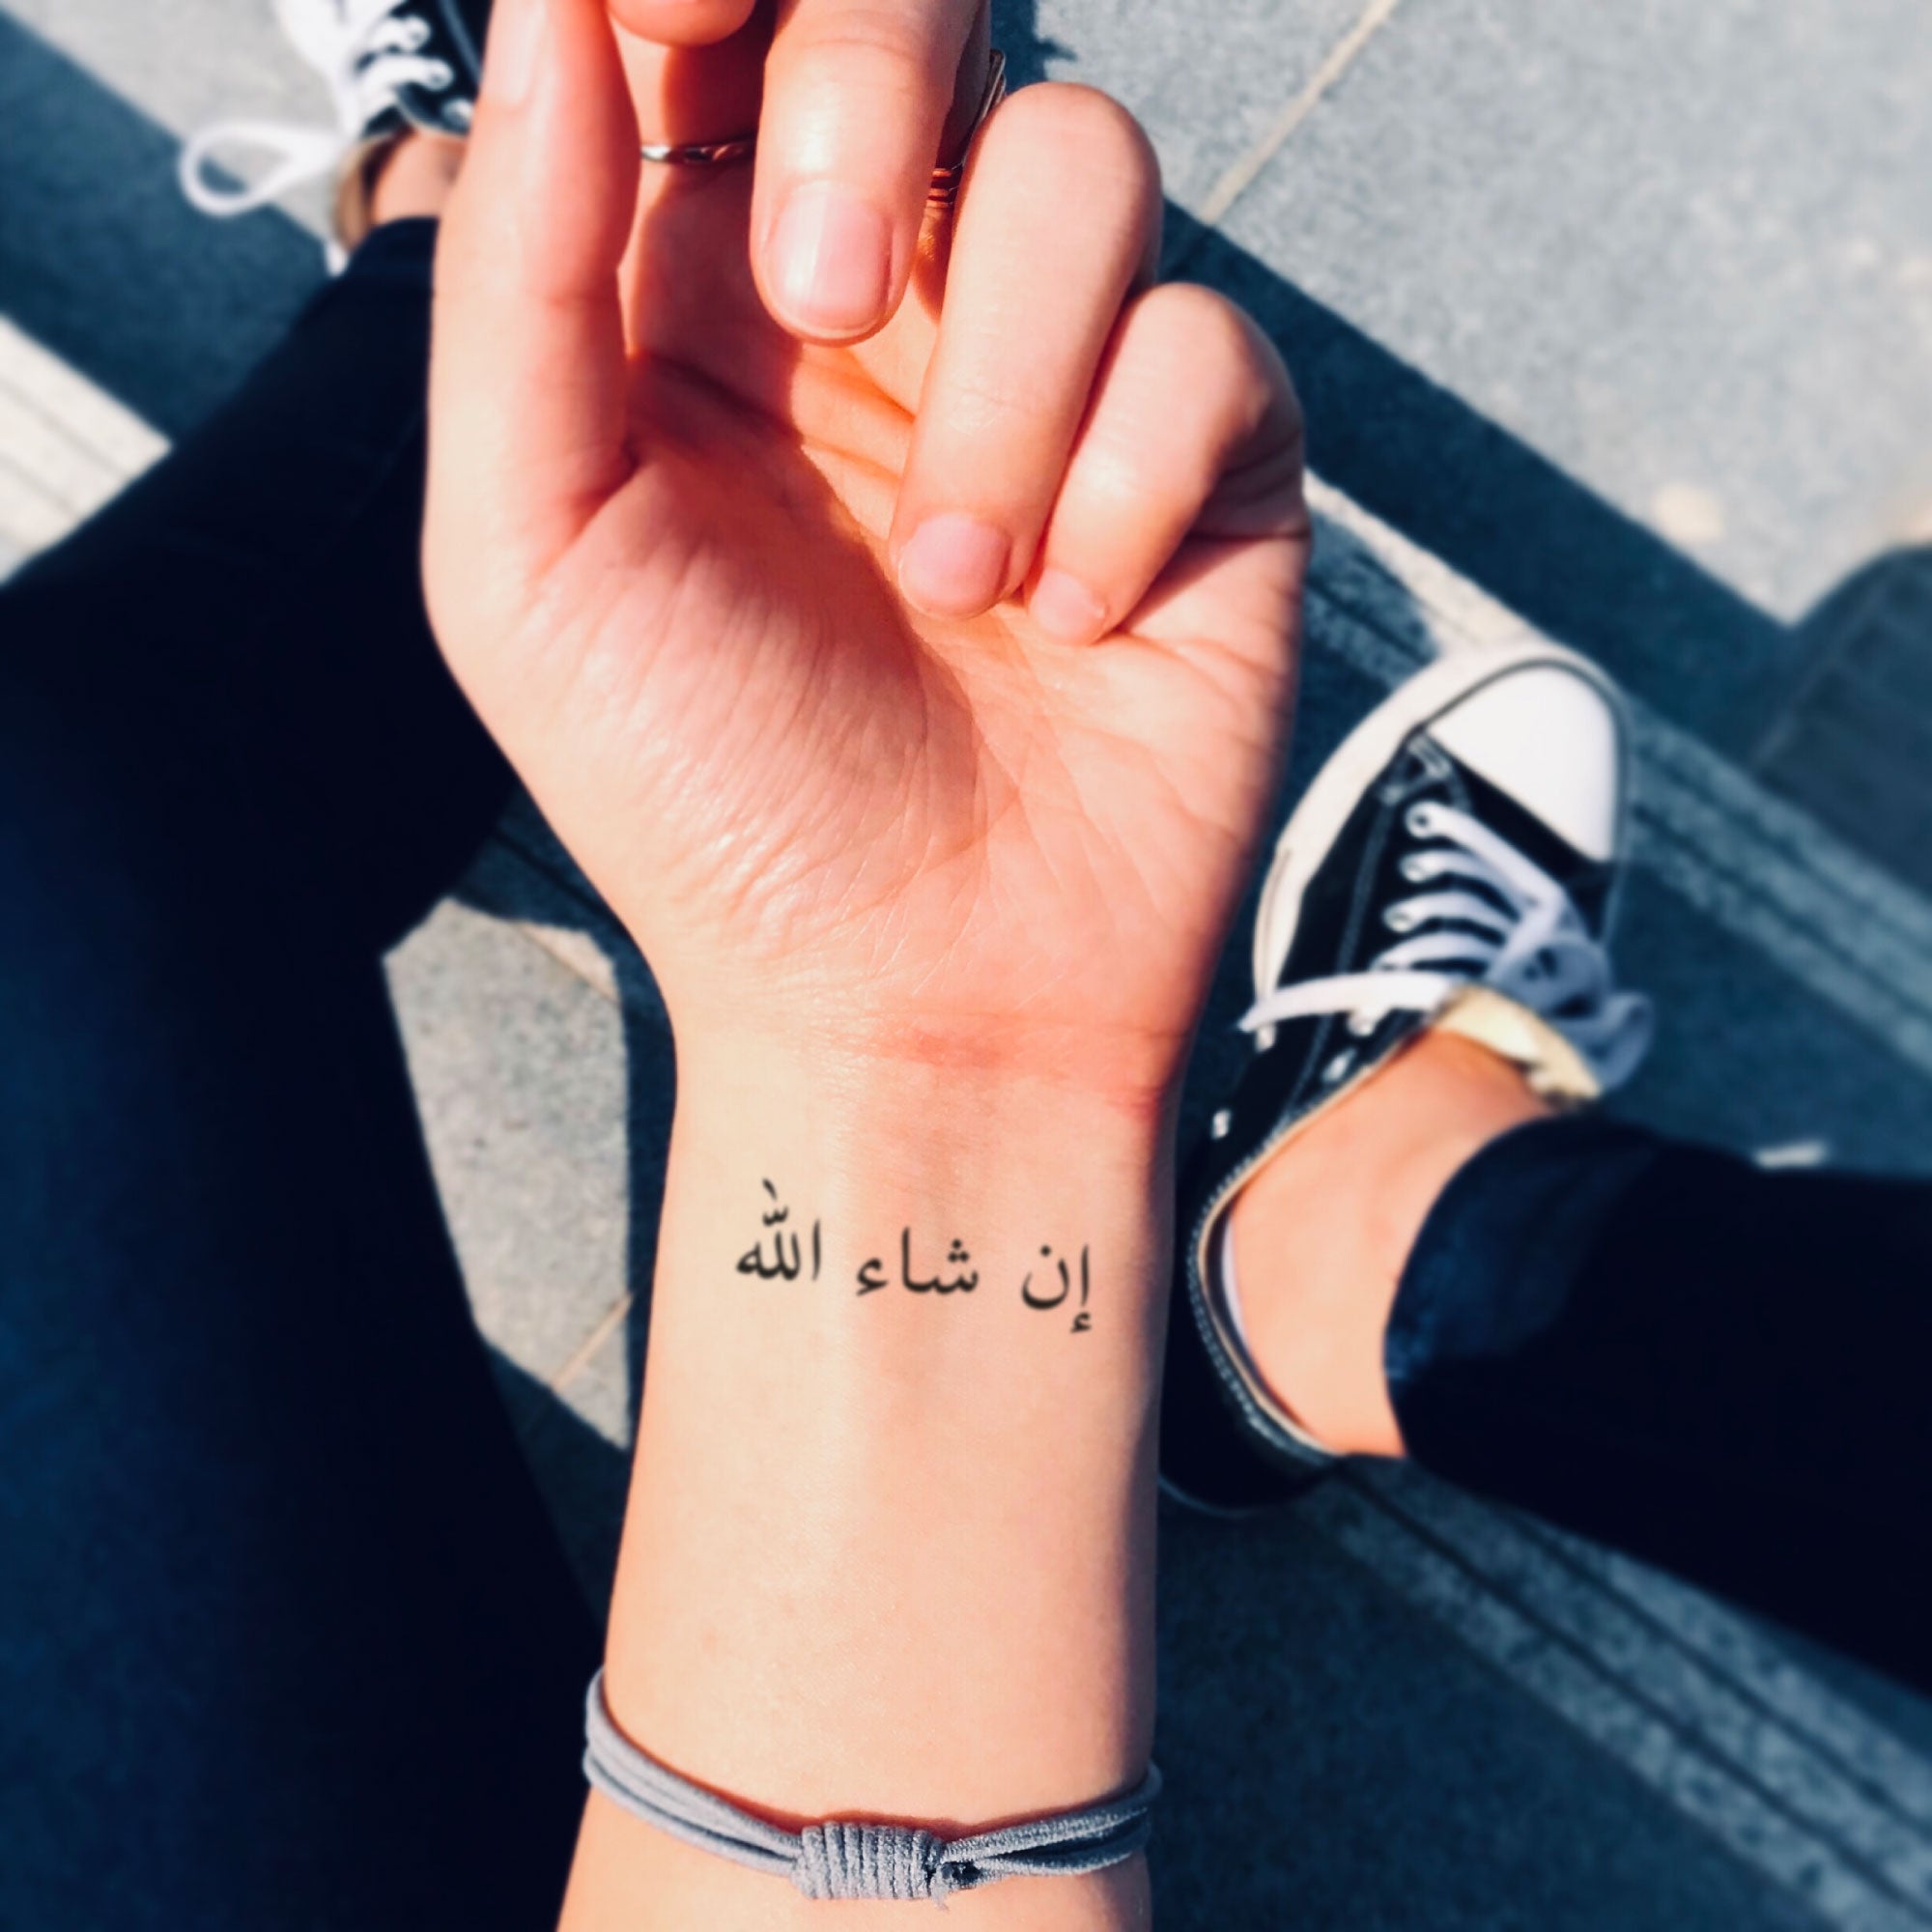 16 Best Arabic Simple Tattoos Pictures  MomCanvas